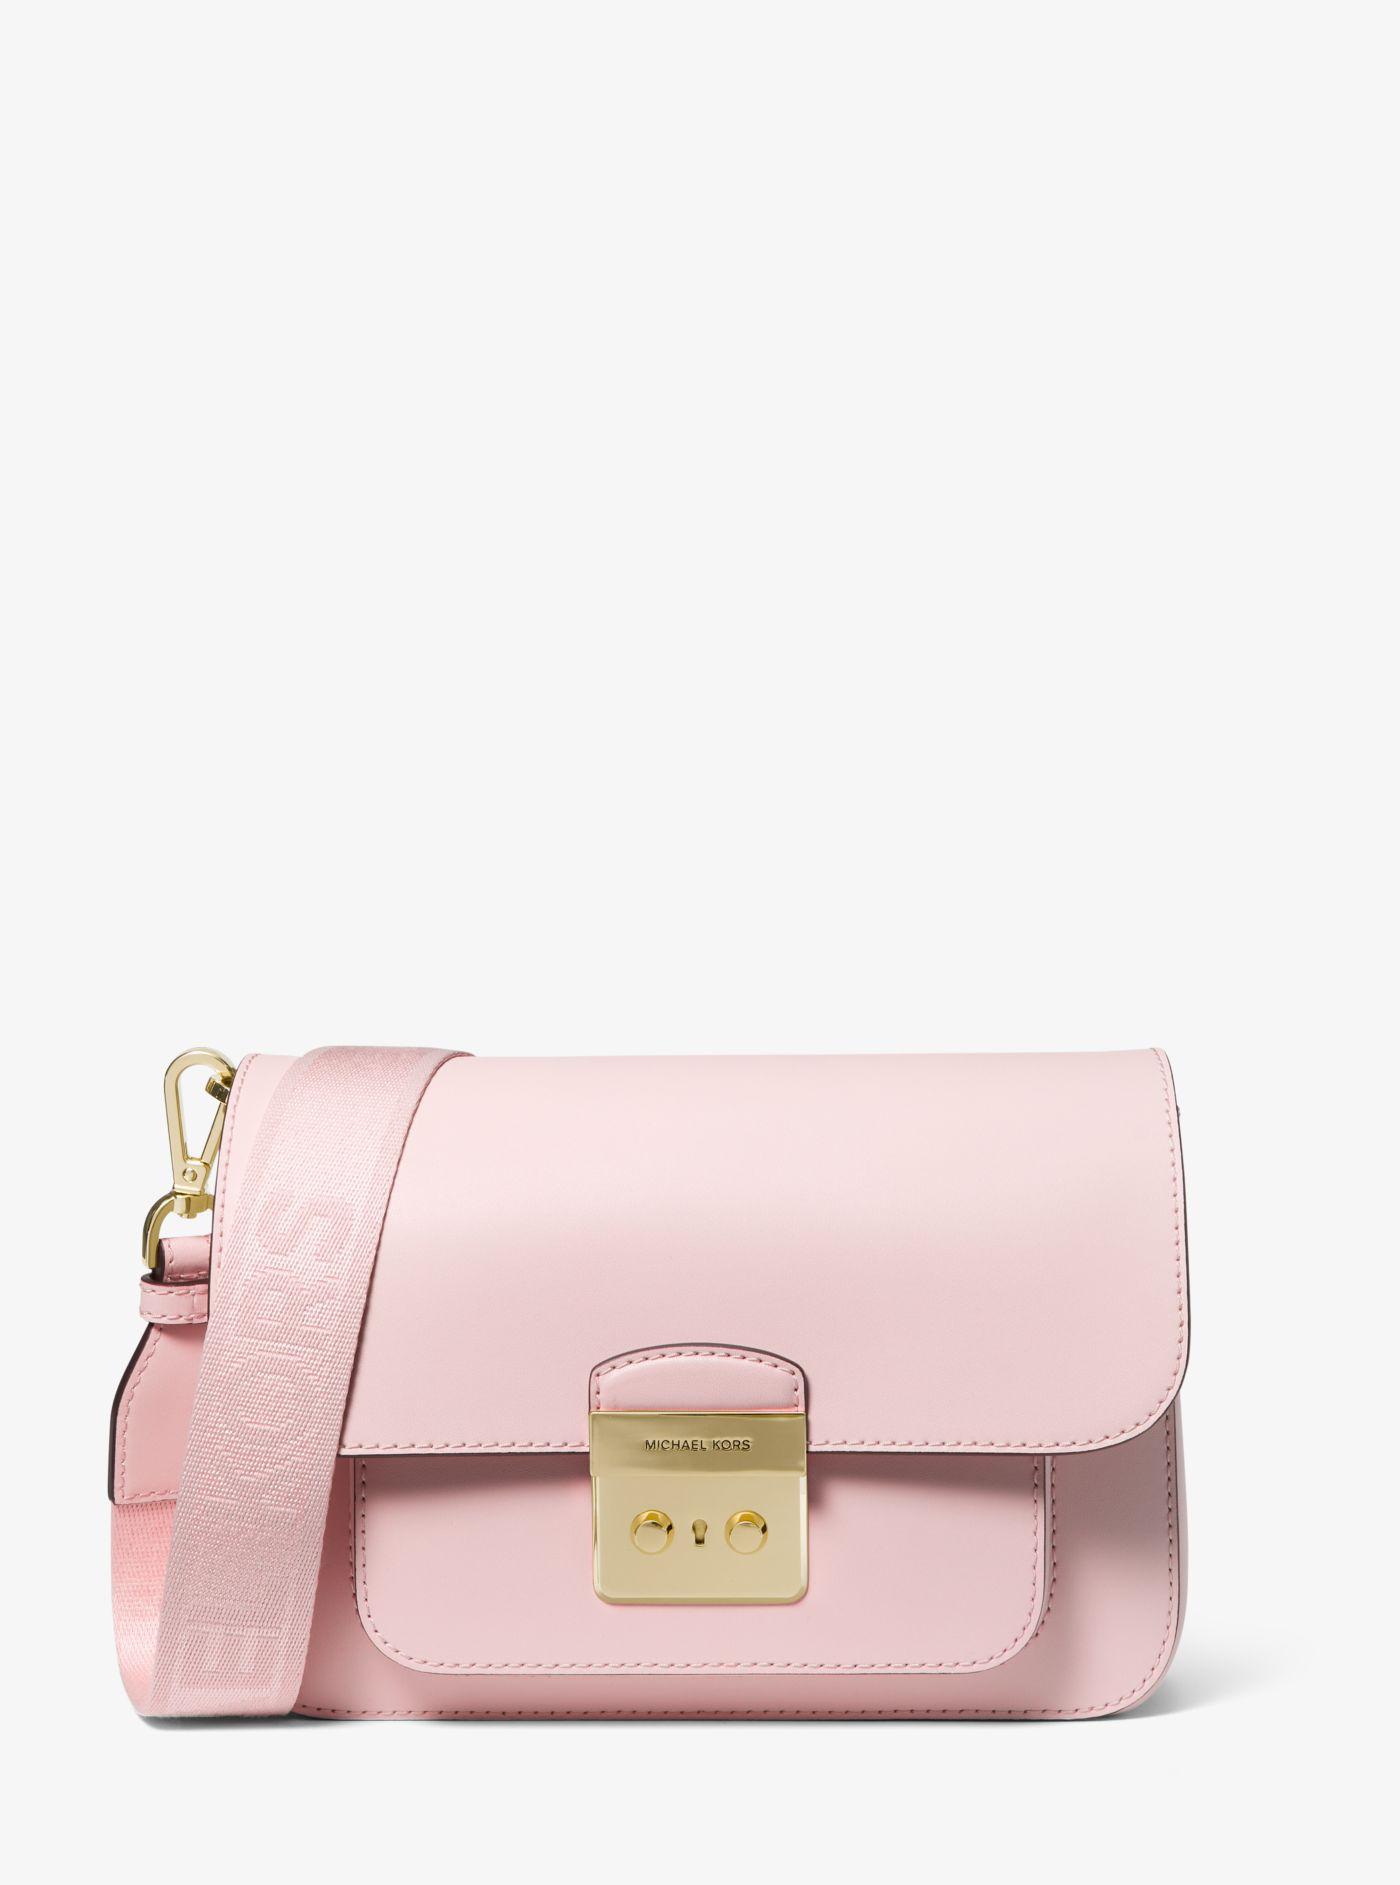 Michael Kors Sloan Editor Medium Leather Shoulder Bag in Pink | Lyst